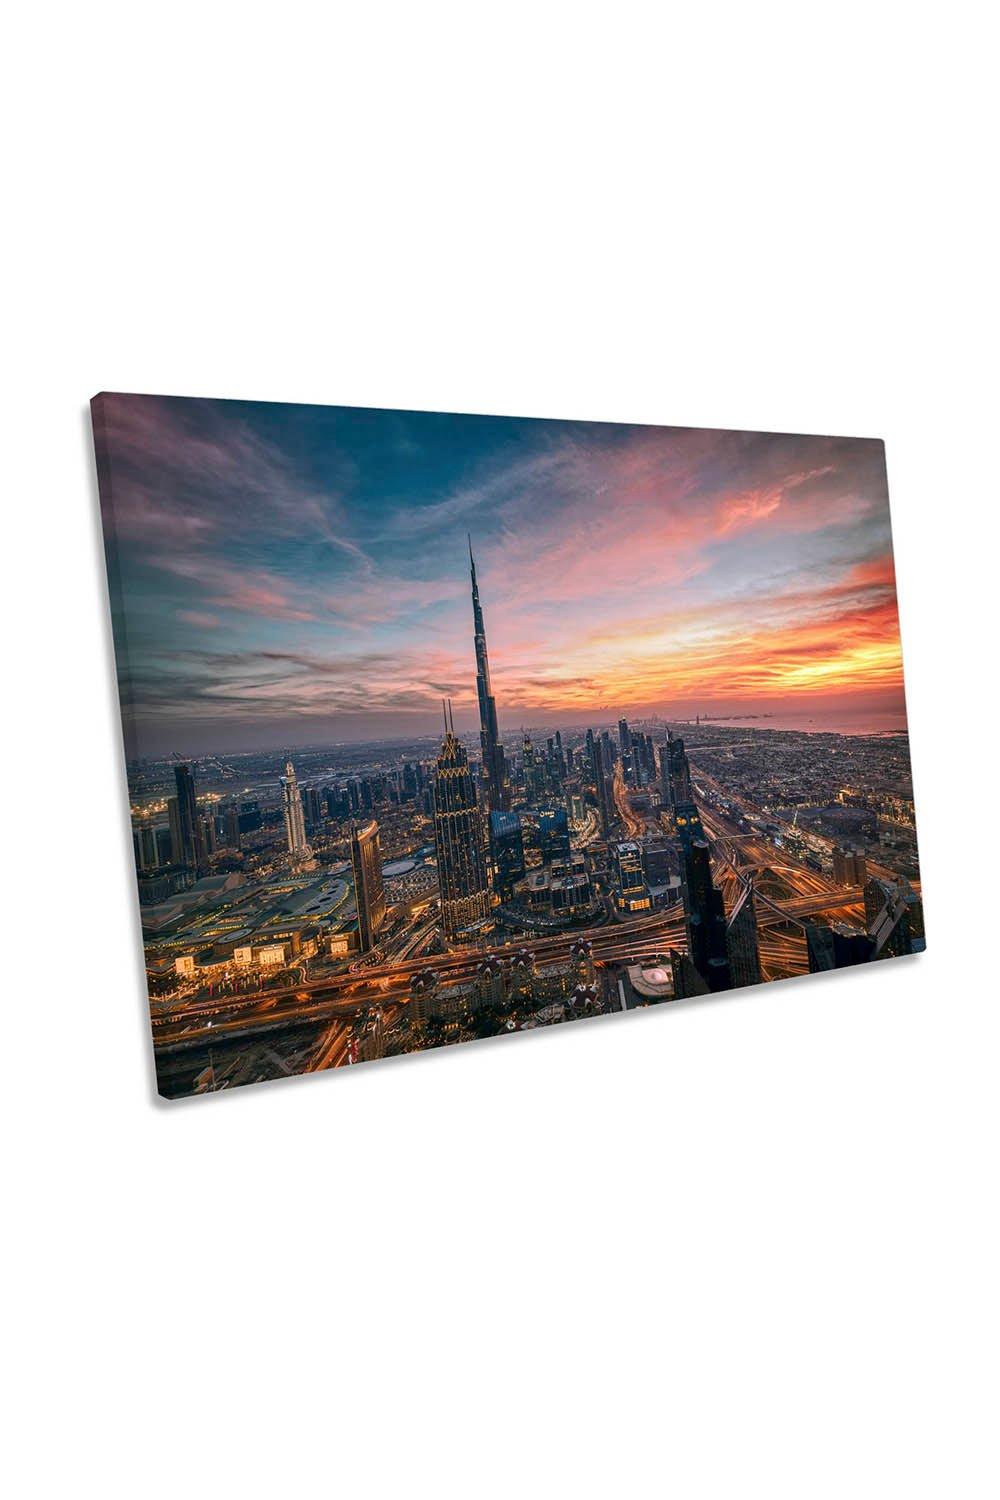 Infinity Dubai Sunset City Arb Amirates Canvas Wall Art Picture Print